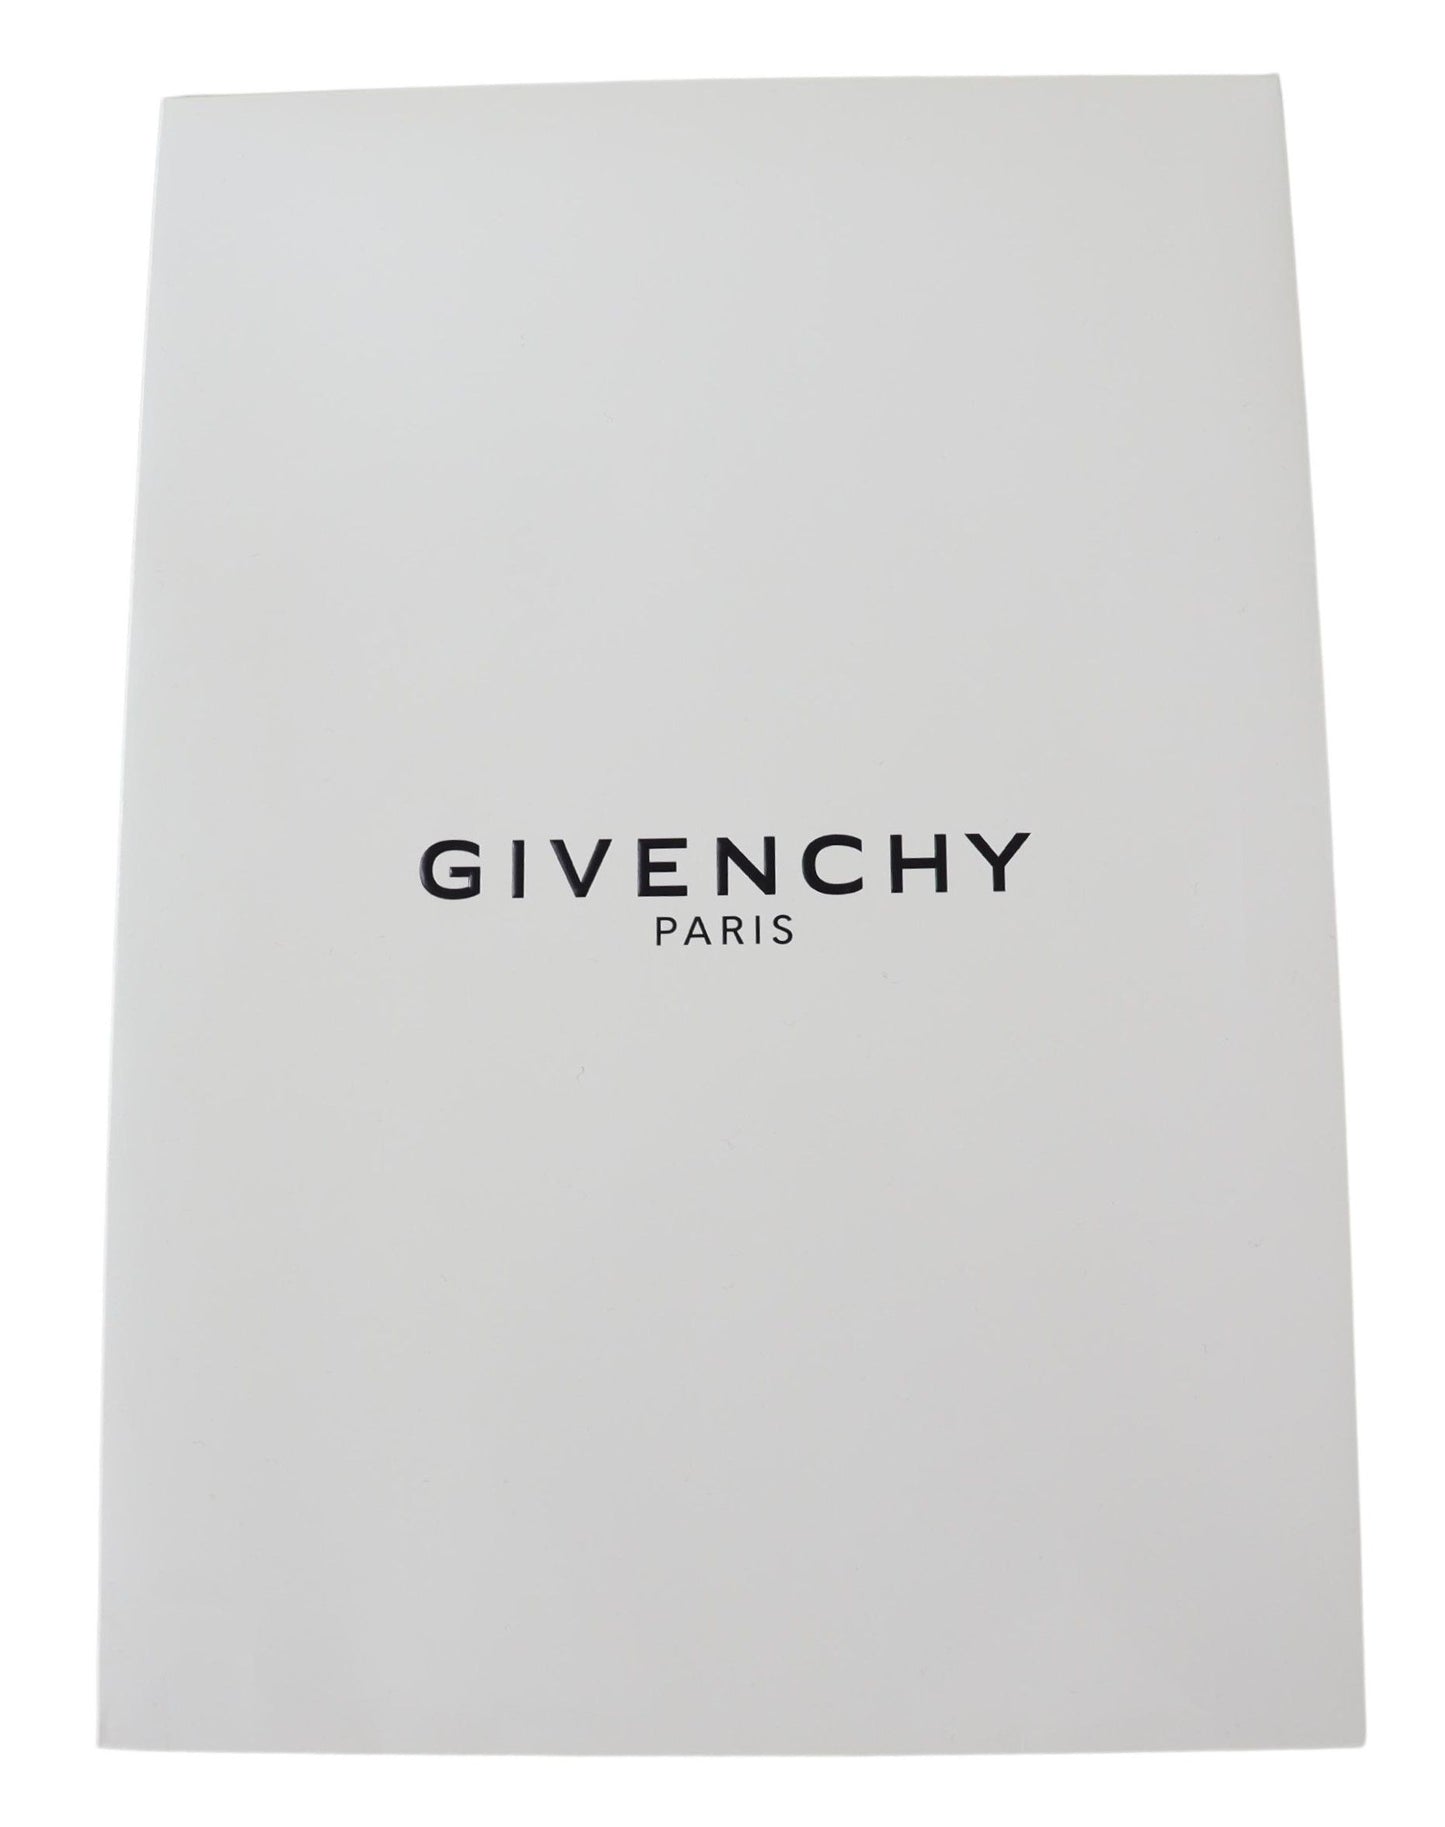 Givenchy Black White Wool Unisex Winter Warm Scarf Wrap Shawl